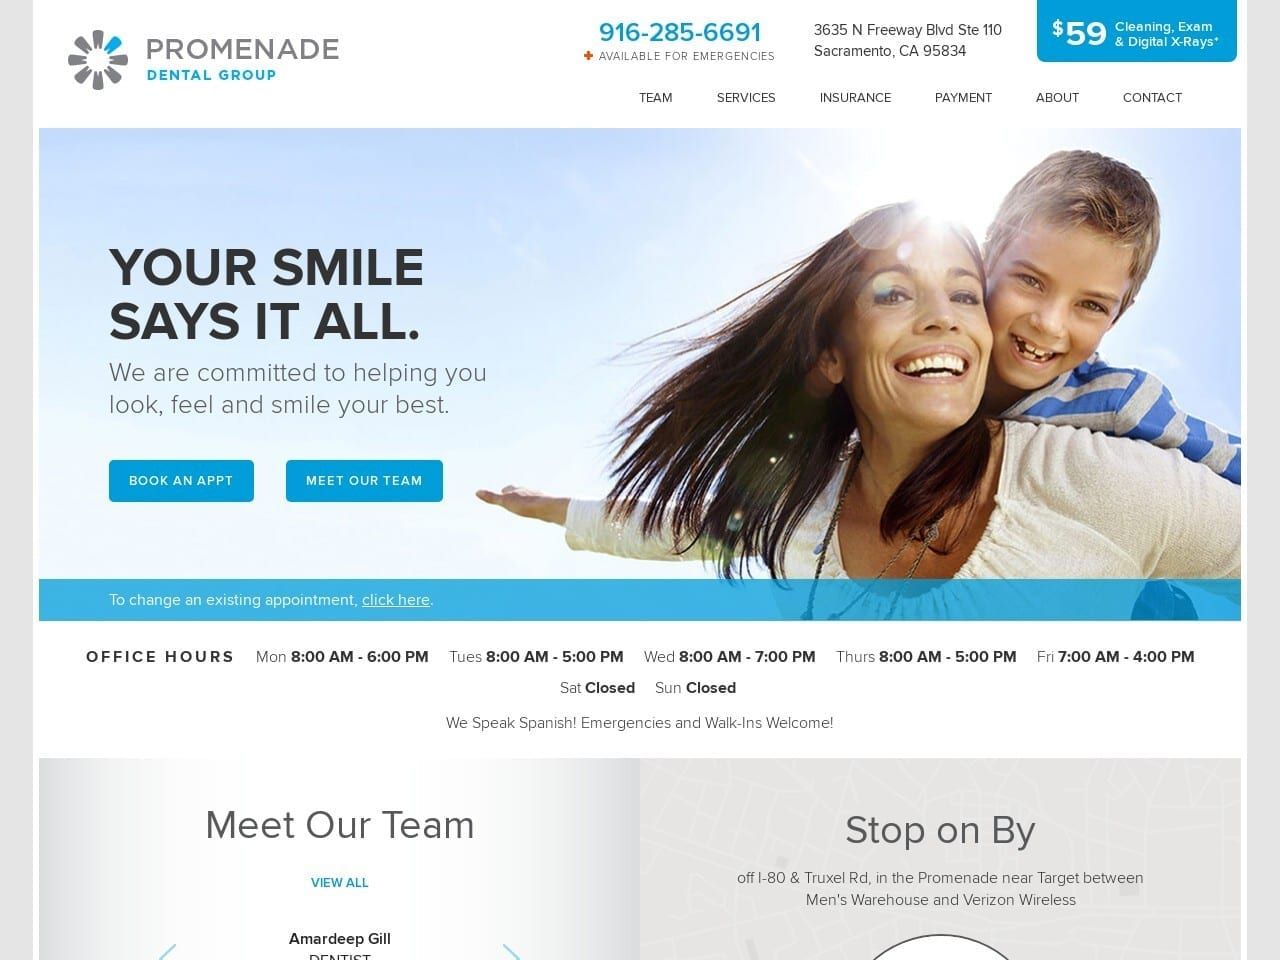 Promenade Dental Group Website Screenshot from promenadedentist.com